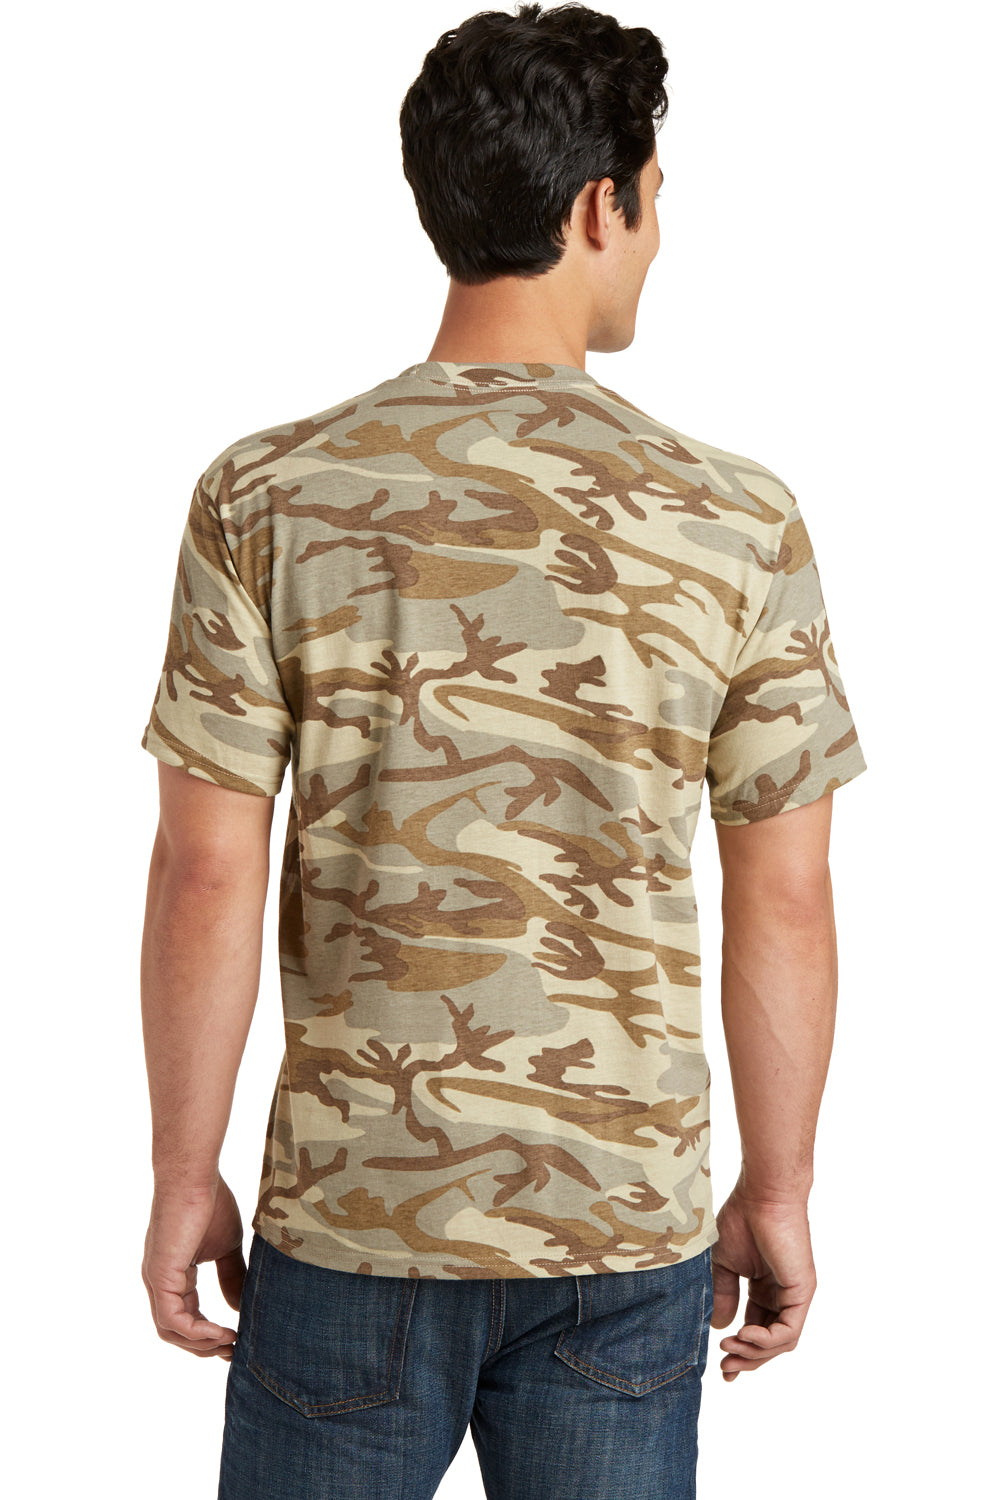 Port & Company PC54C Mens Core Short Sleeve Crewneck T-Shirt Desert Camo Back